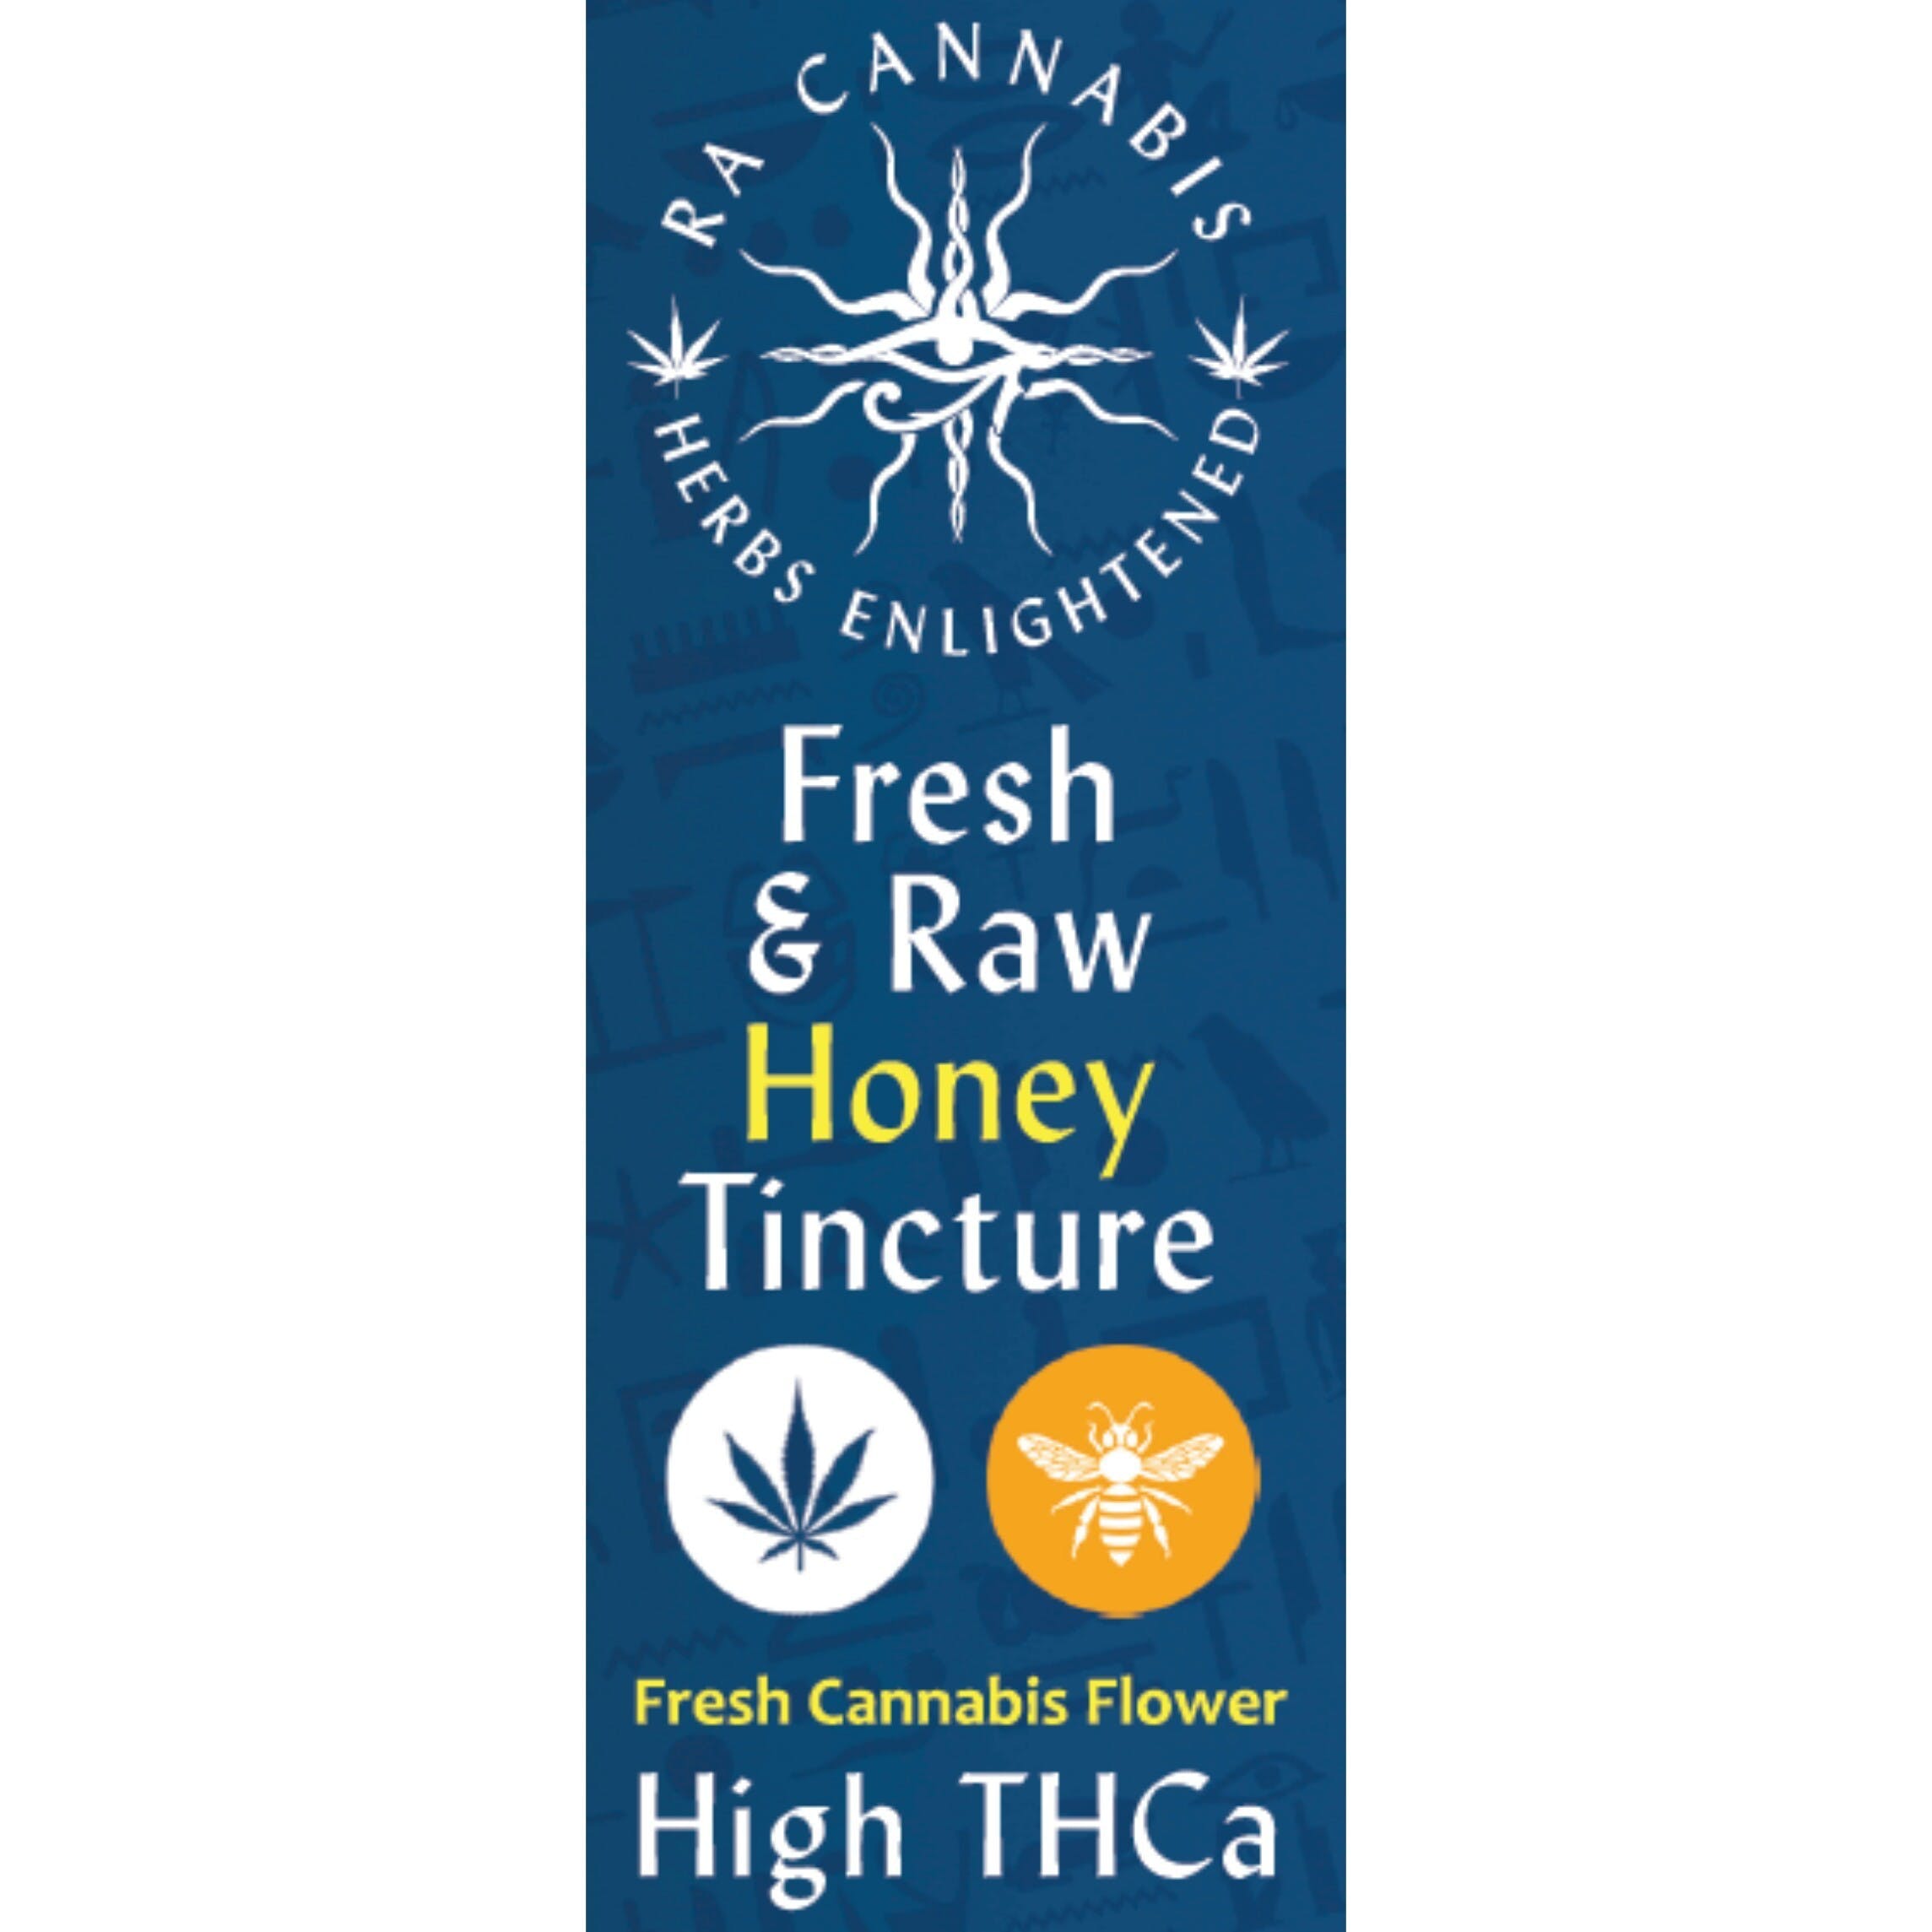 marijuana-dispensaries-attis-trading-company-lincoln-city-in-lincoln-city-raw-a-fresh-thca-tincture-w-honey